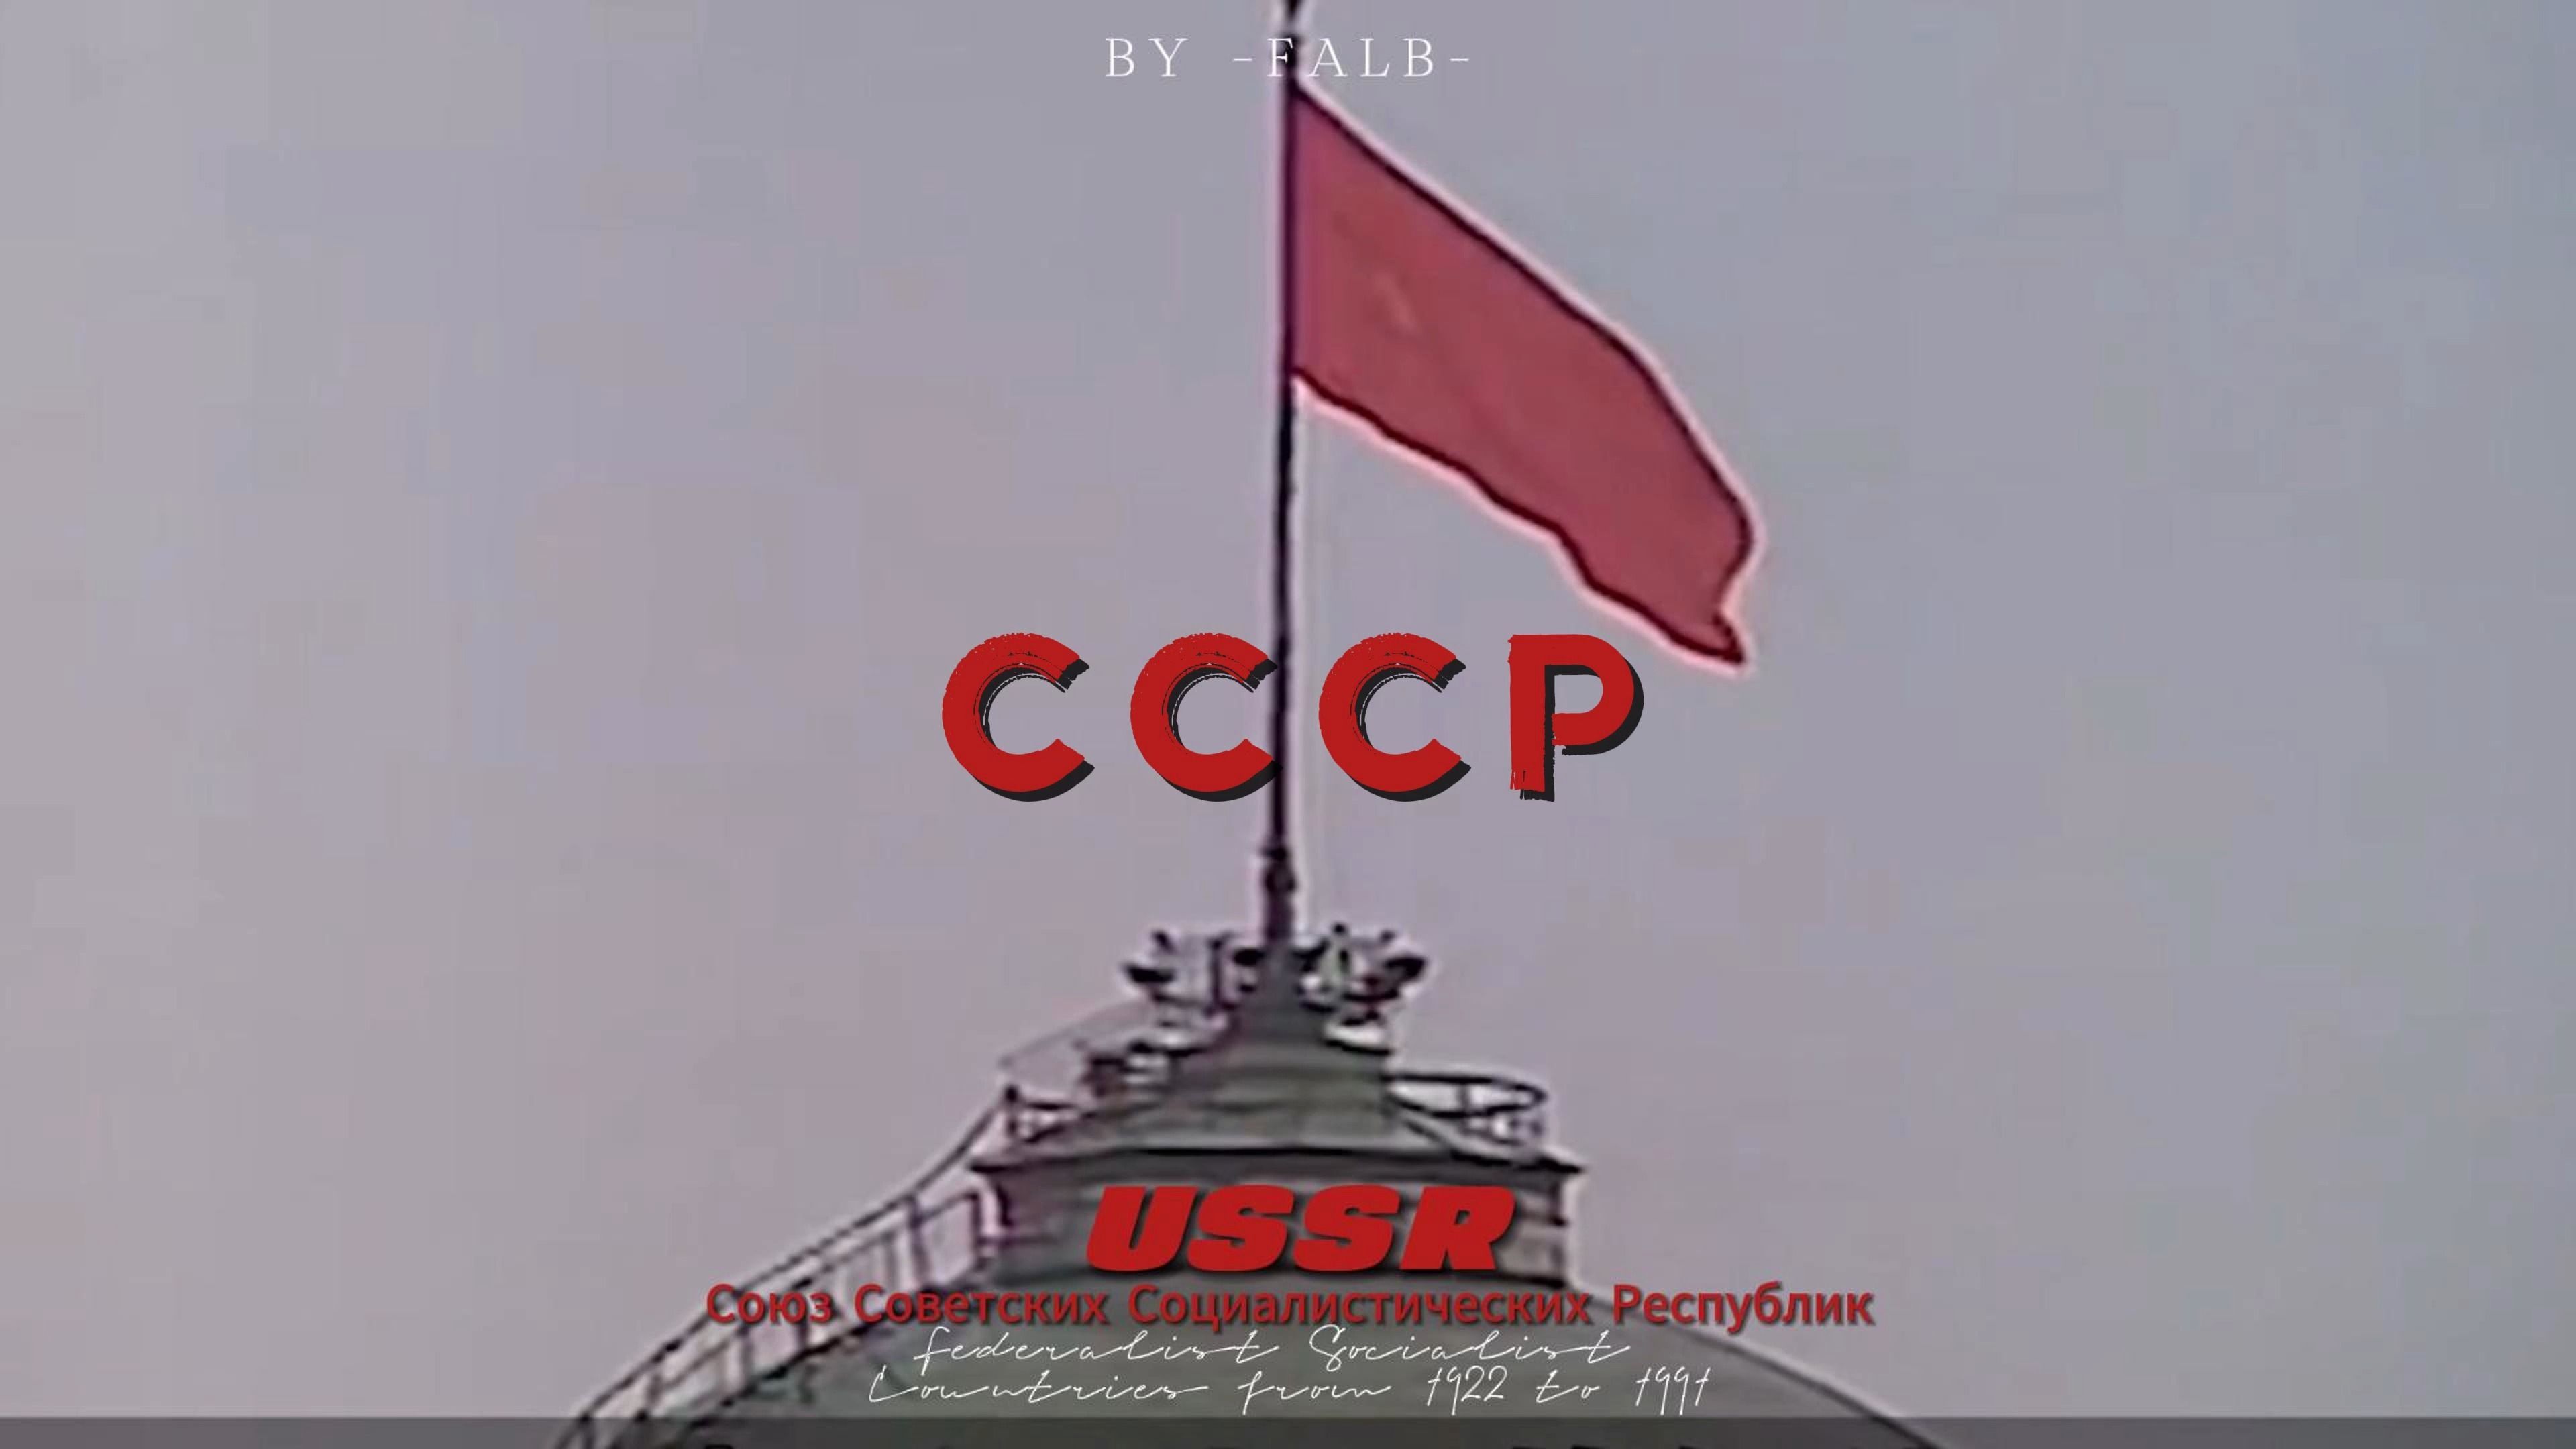 【USSR】“锤子和镰刀带来的压迫感”